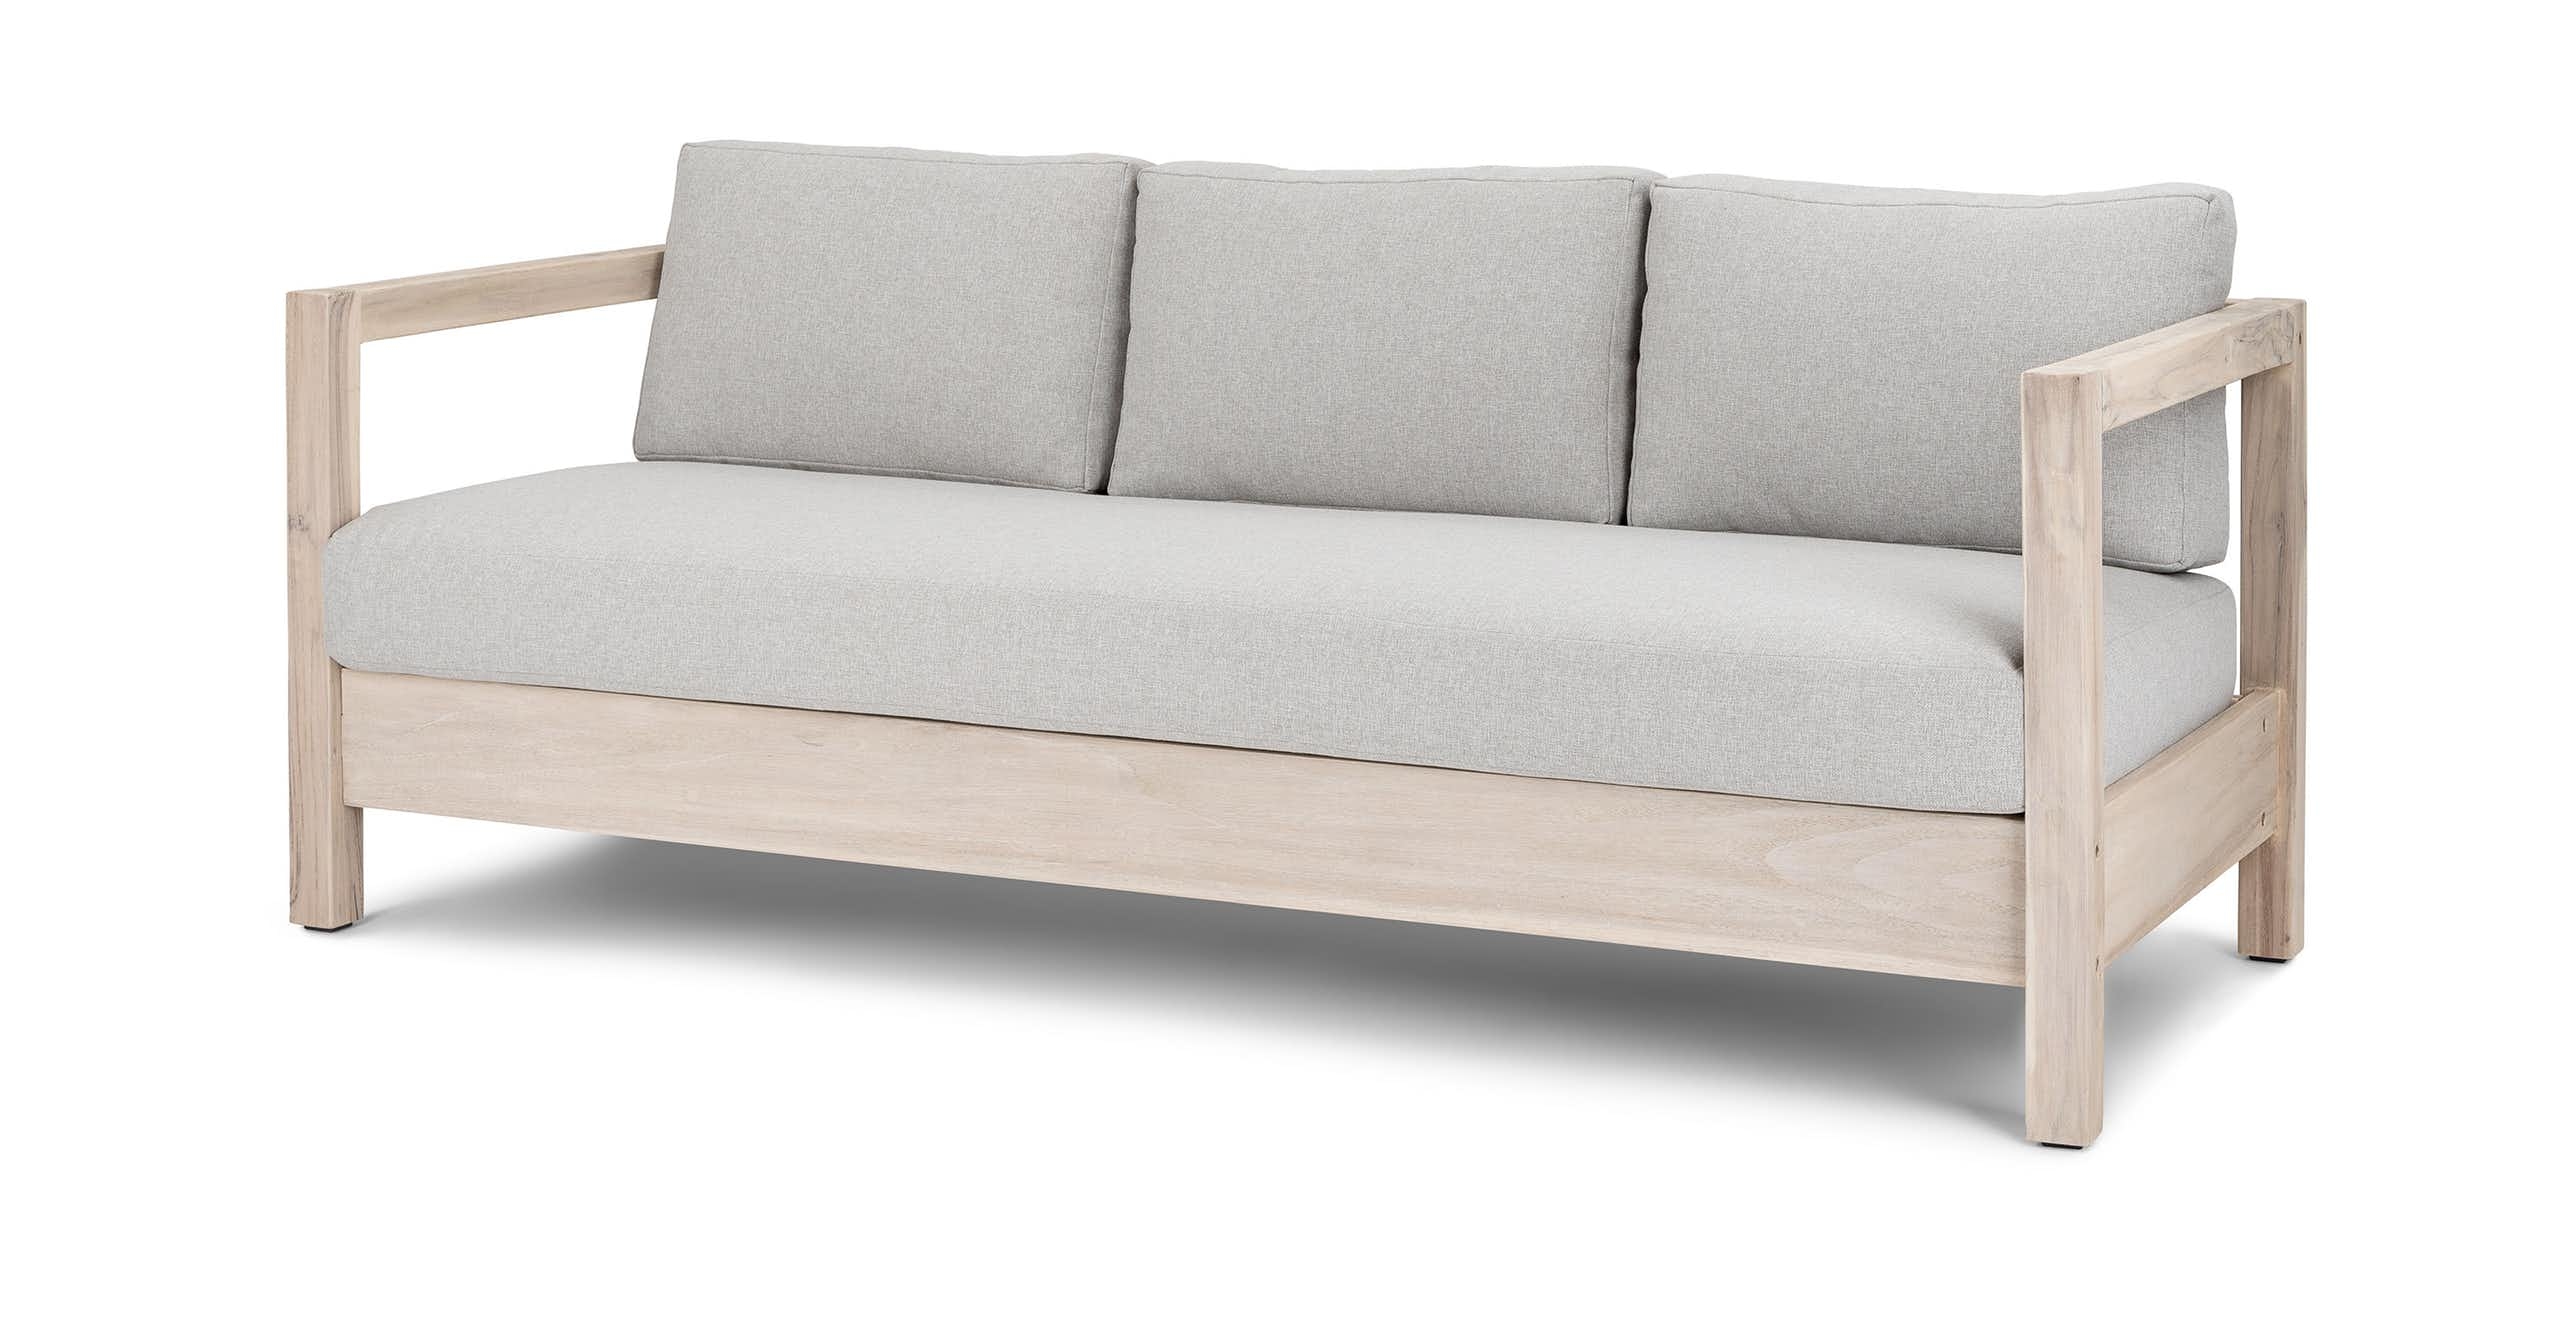 Arca Driftwood Gray Sofa - Image 4